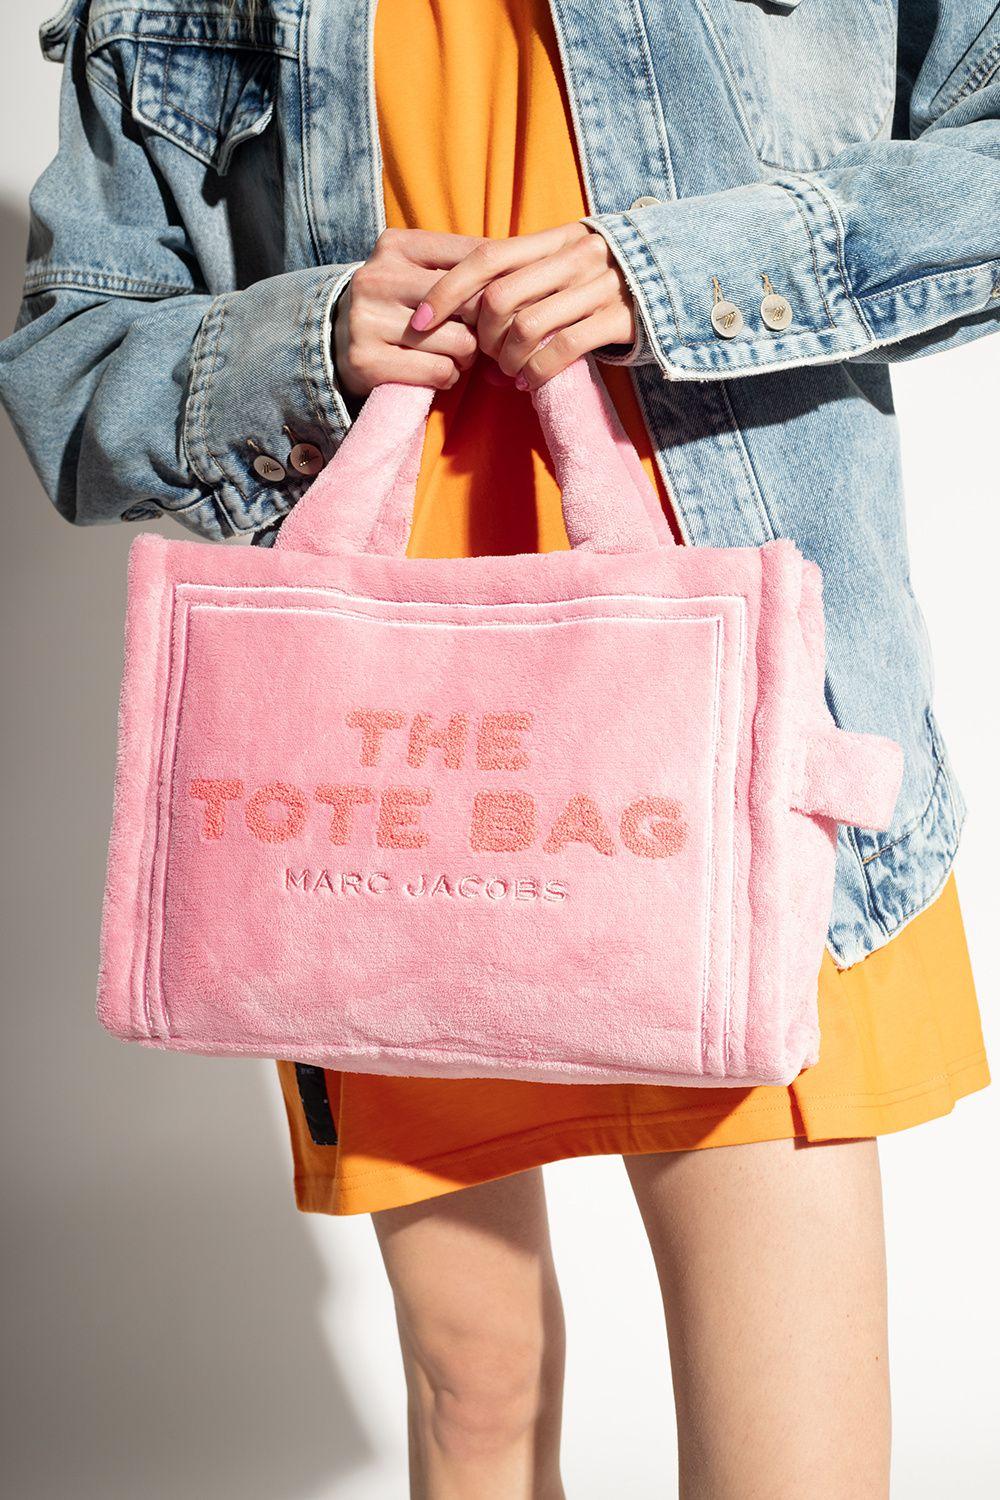 marc jacobs the terry medium tote pink handbag